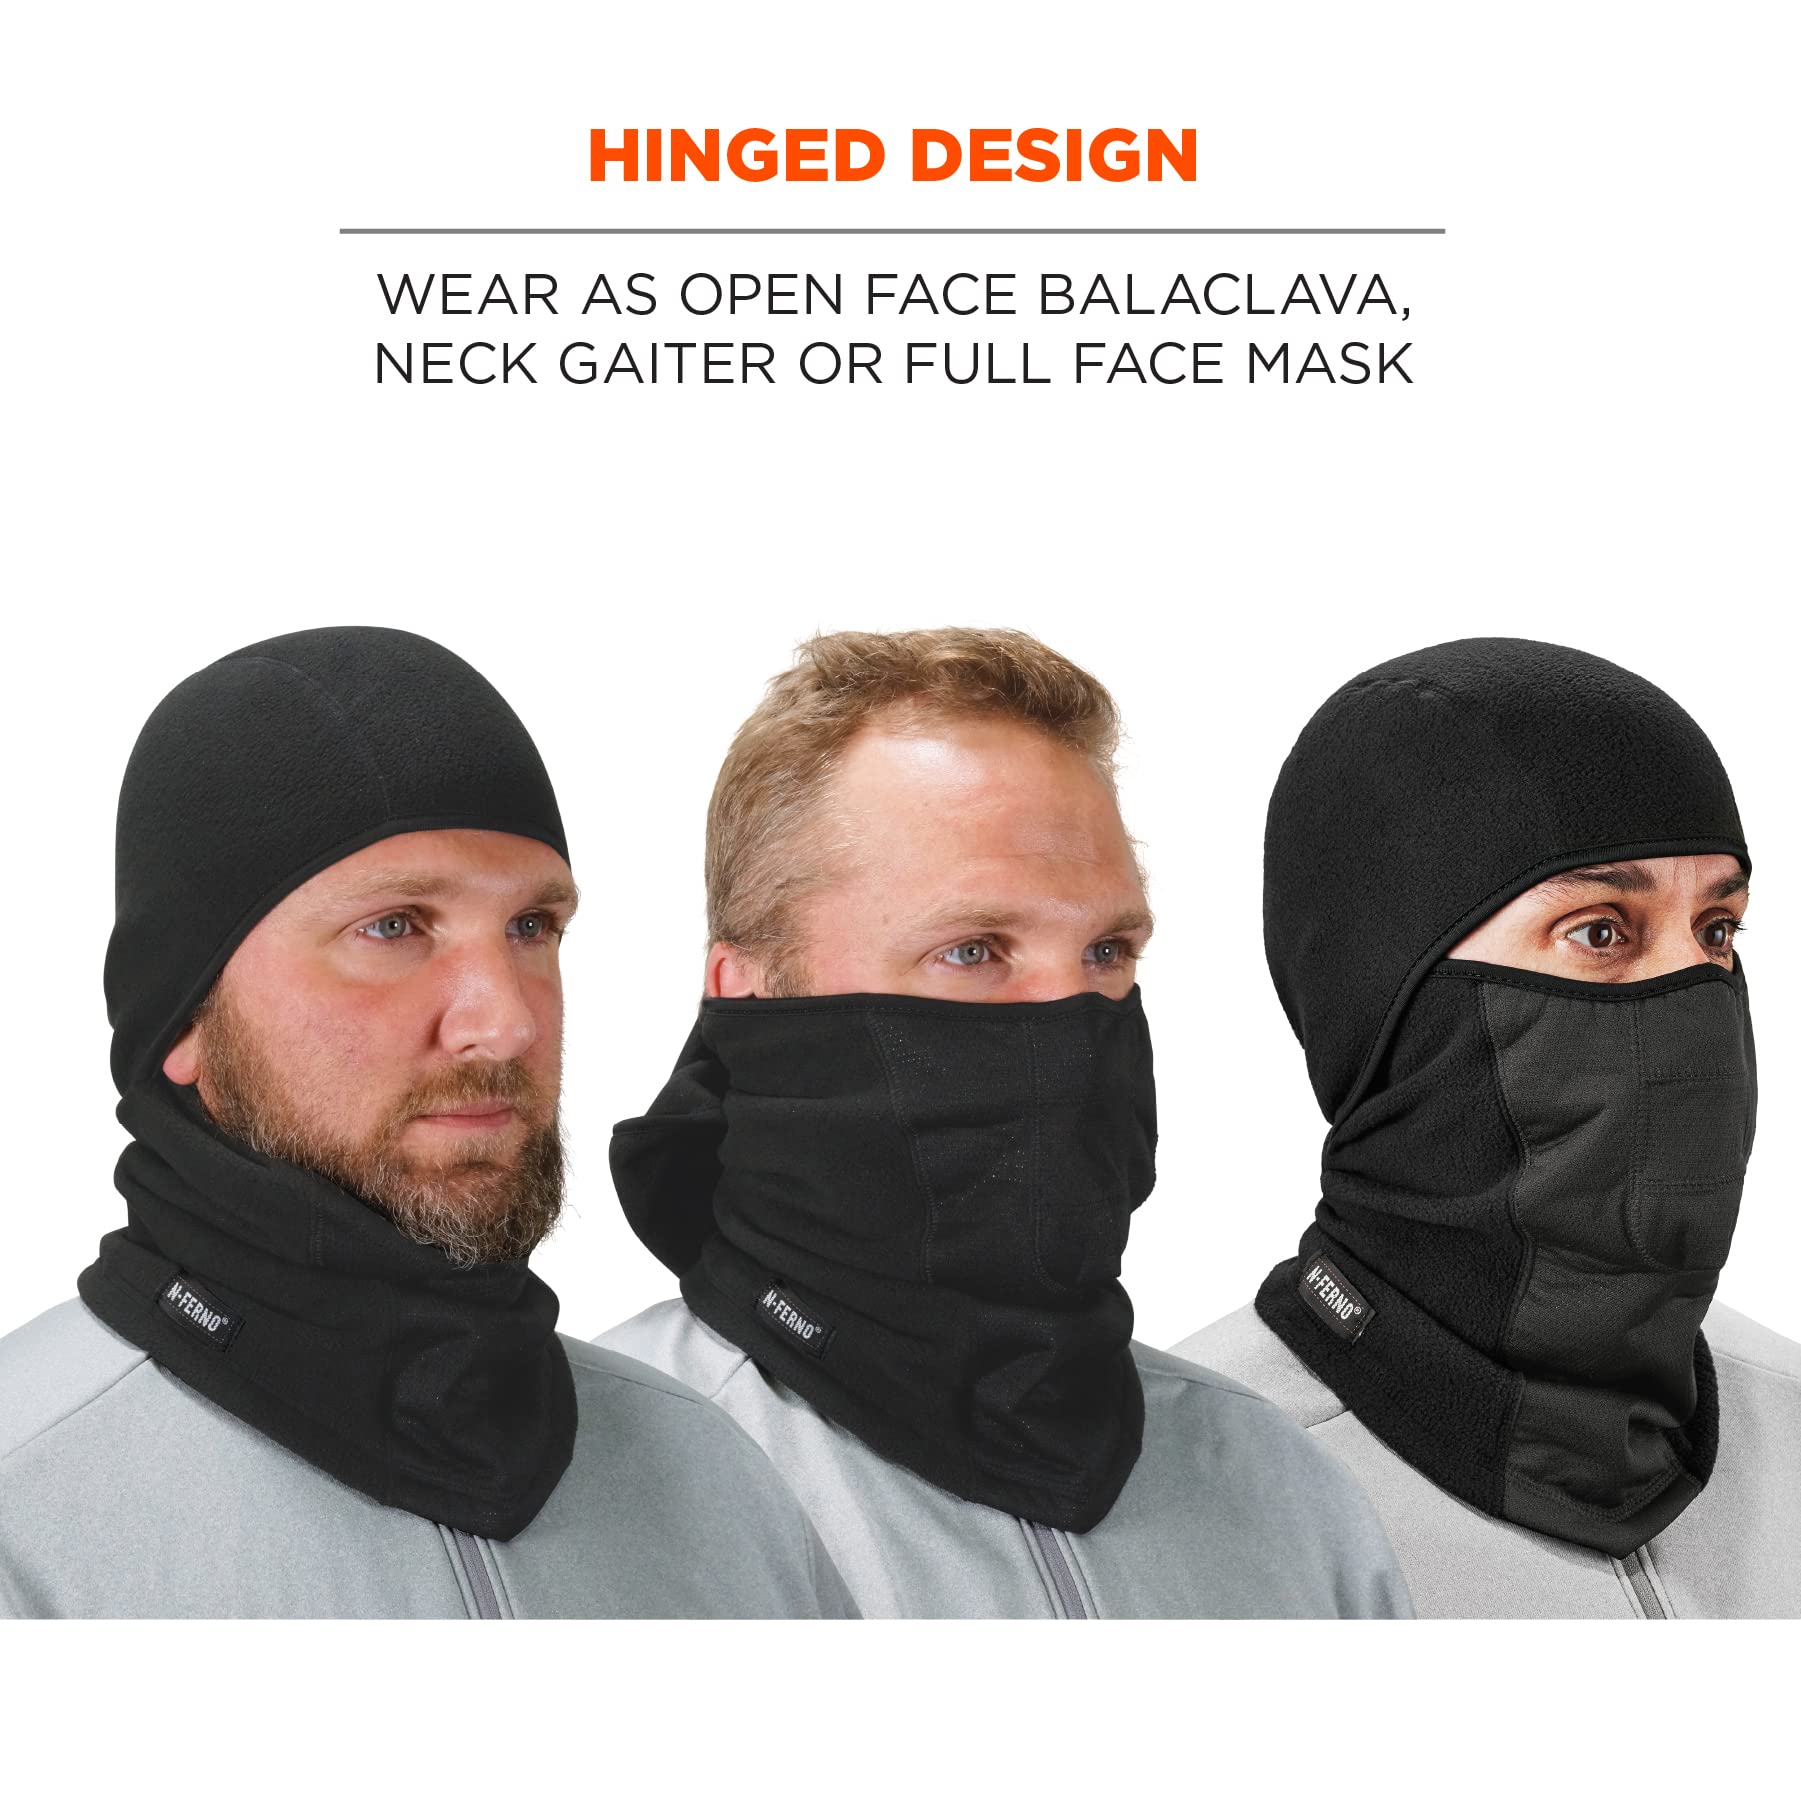 3-Way Ergodyne Wind-Proof Hinged Balaclava Face Mask (Black, One Size) $3.70 + Free Shipping w/ Prime or on $25+